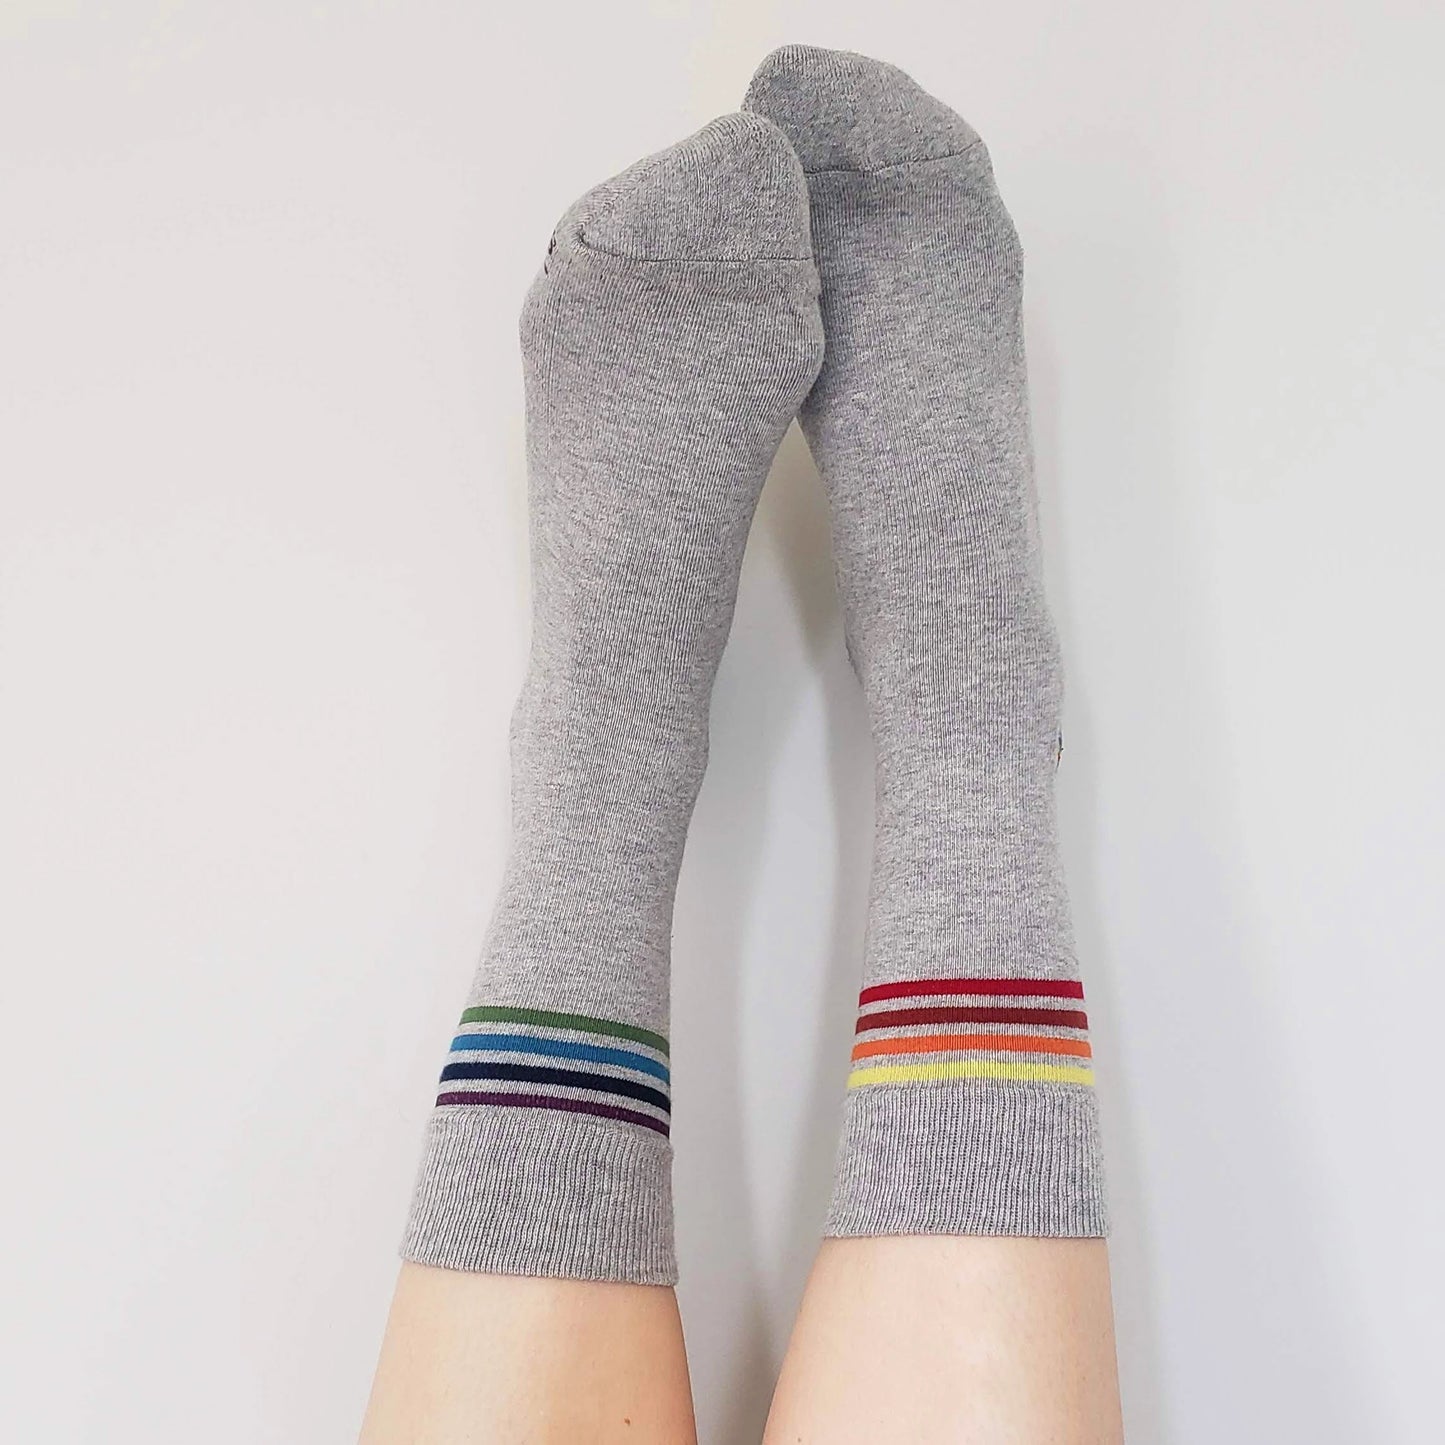 Socks that Save Lgbtq Lives - Grey